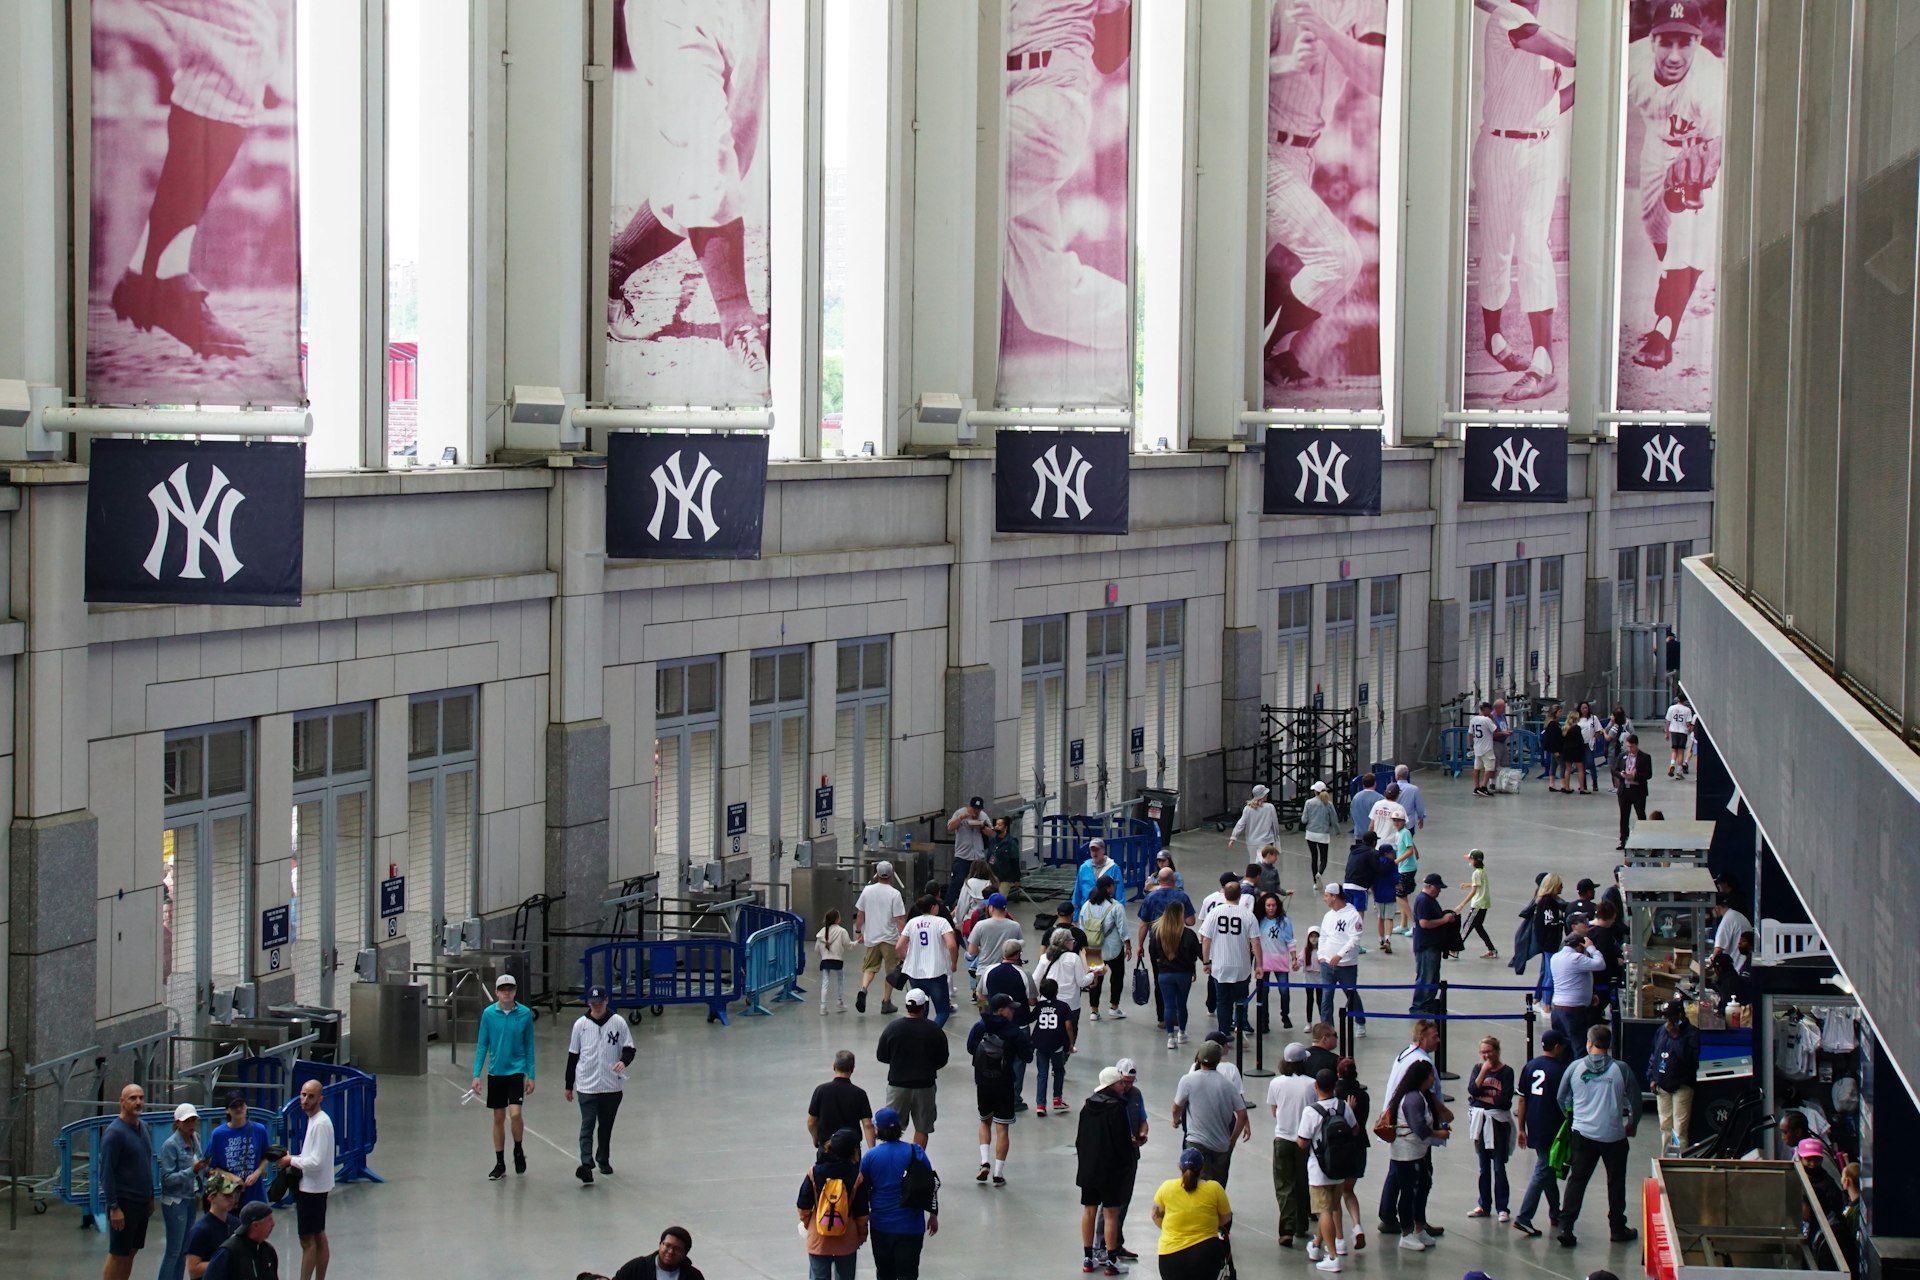 Interior view of the concourse of Yankee Stadium, Bronx, New York City, New York, USA